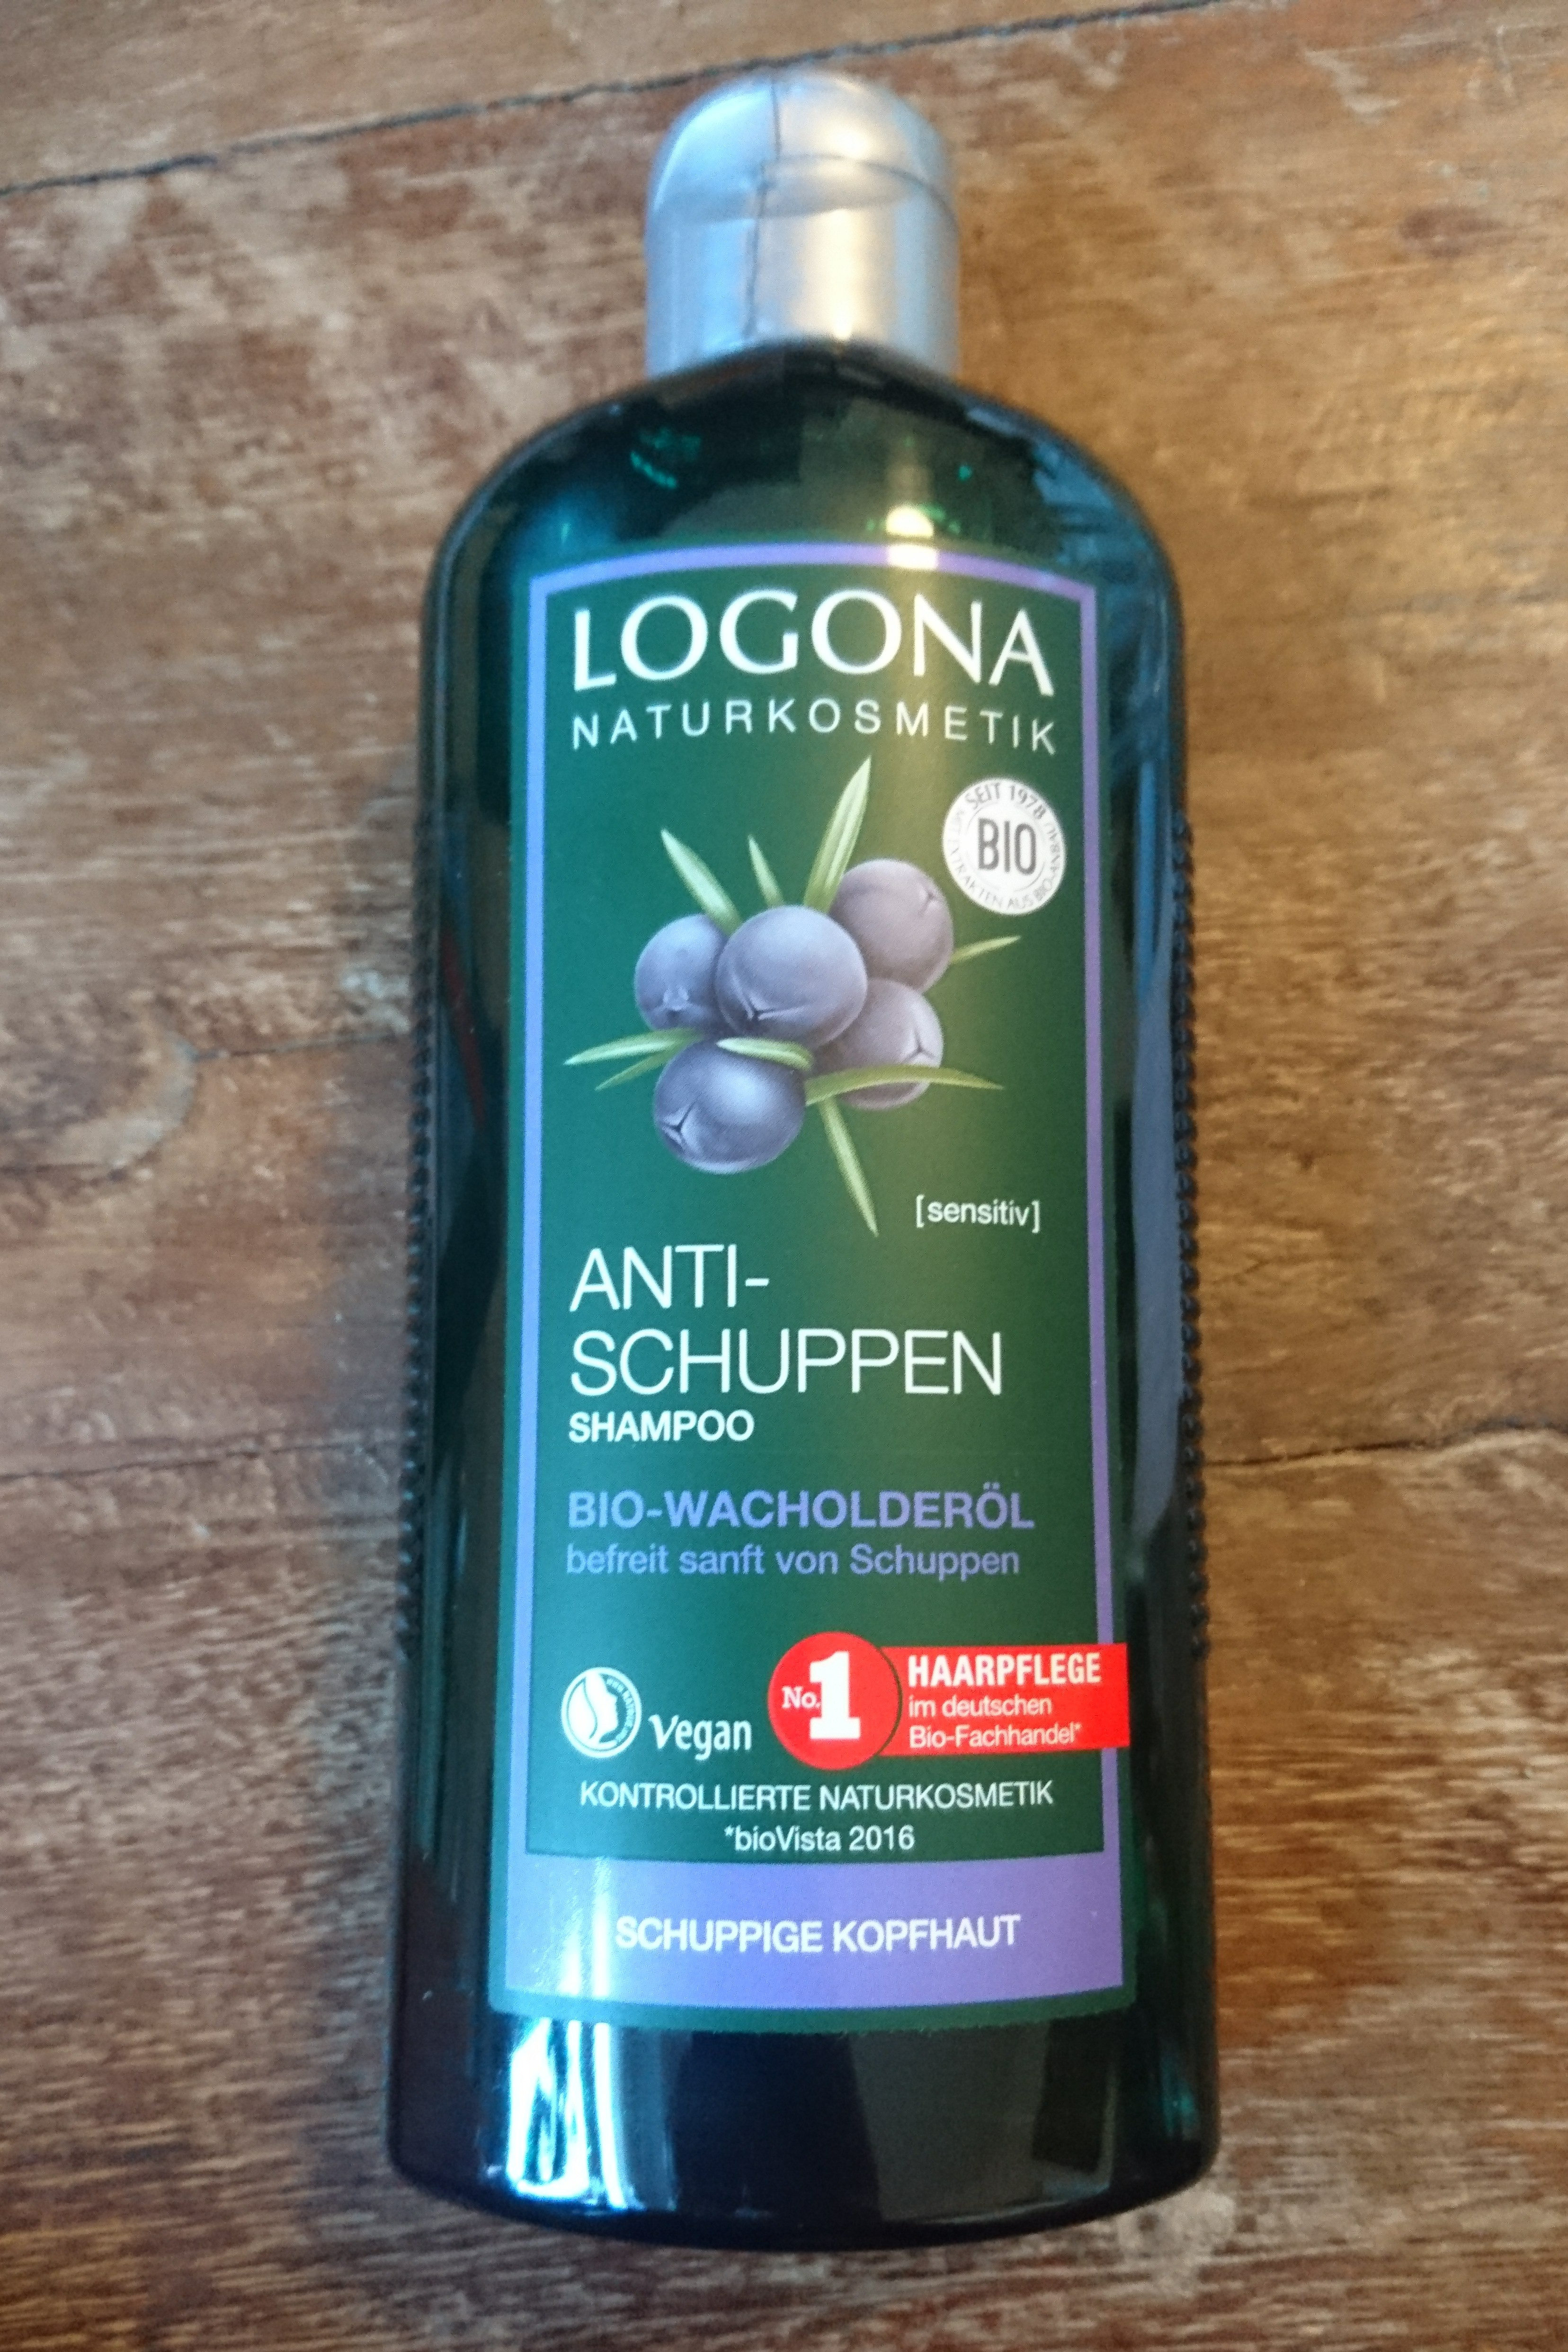 Logona Naturkosmetik Anti-Schuppenshampoo - Product - de